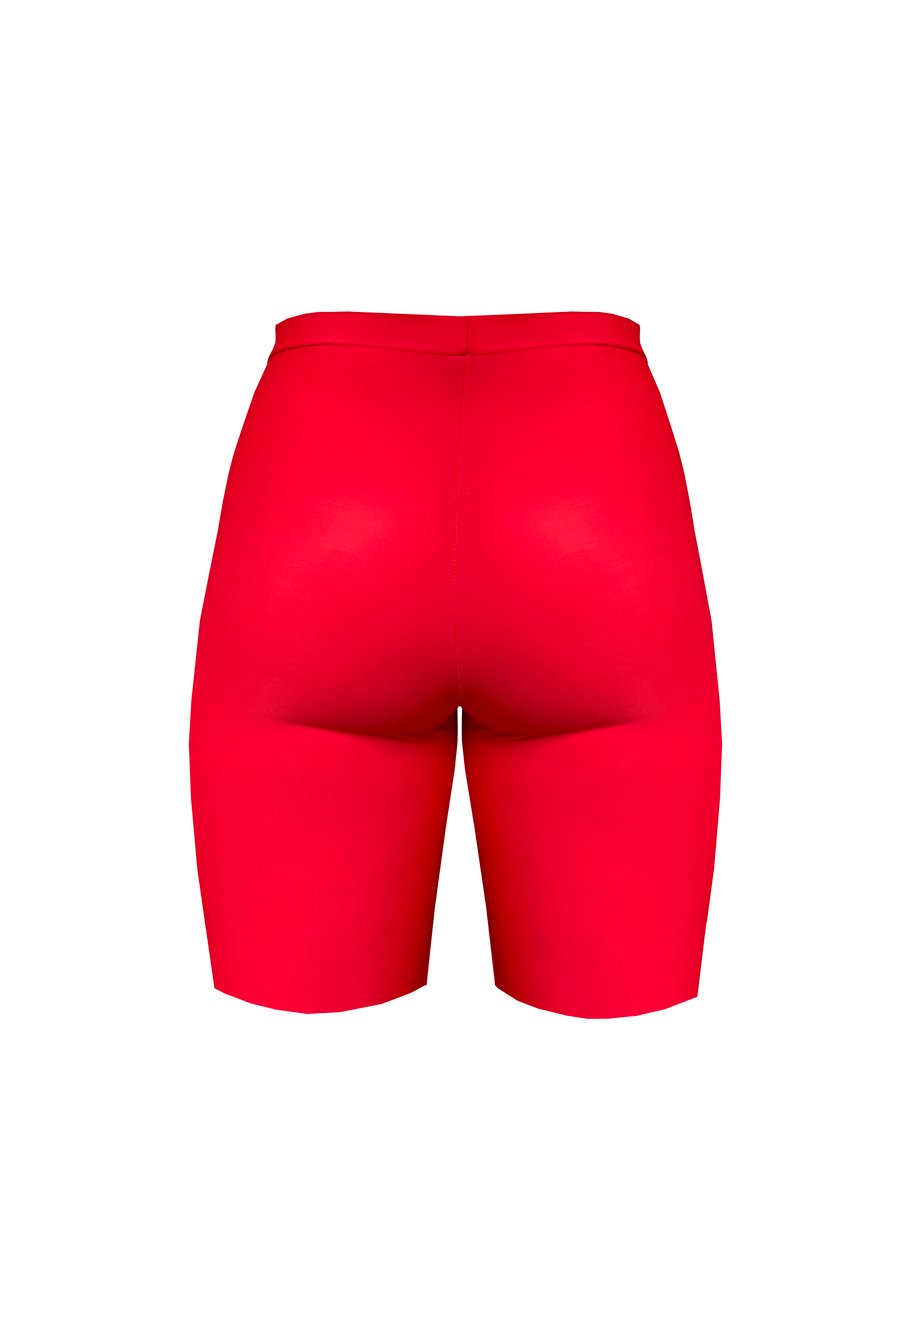 Image of Streamlined Biker Shorts - Hot Red